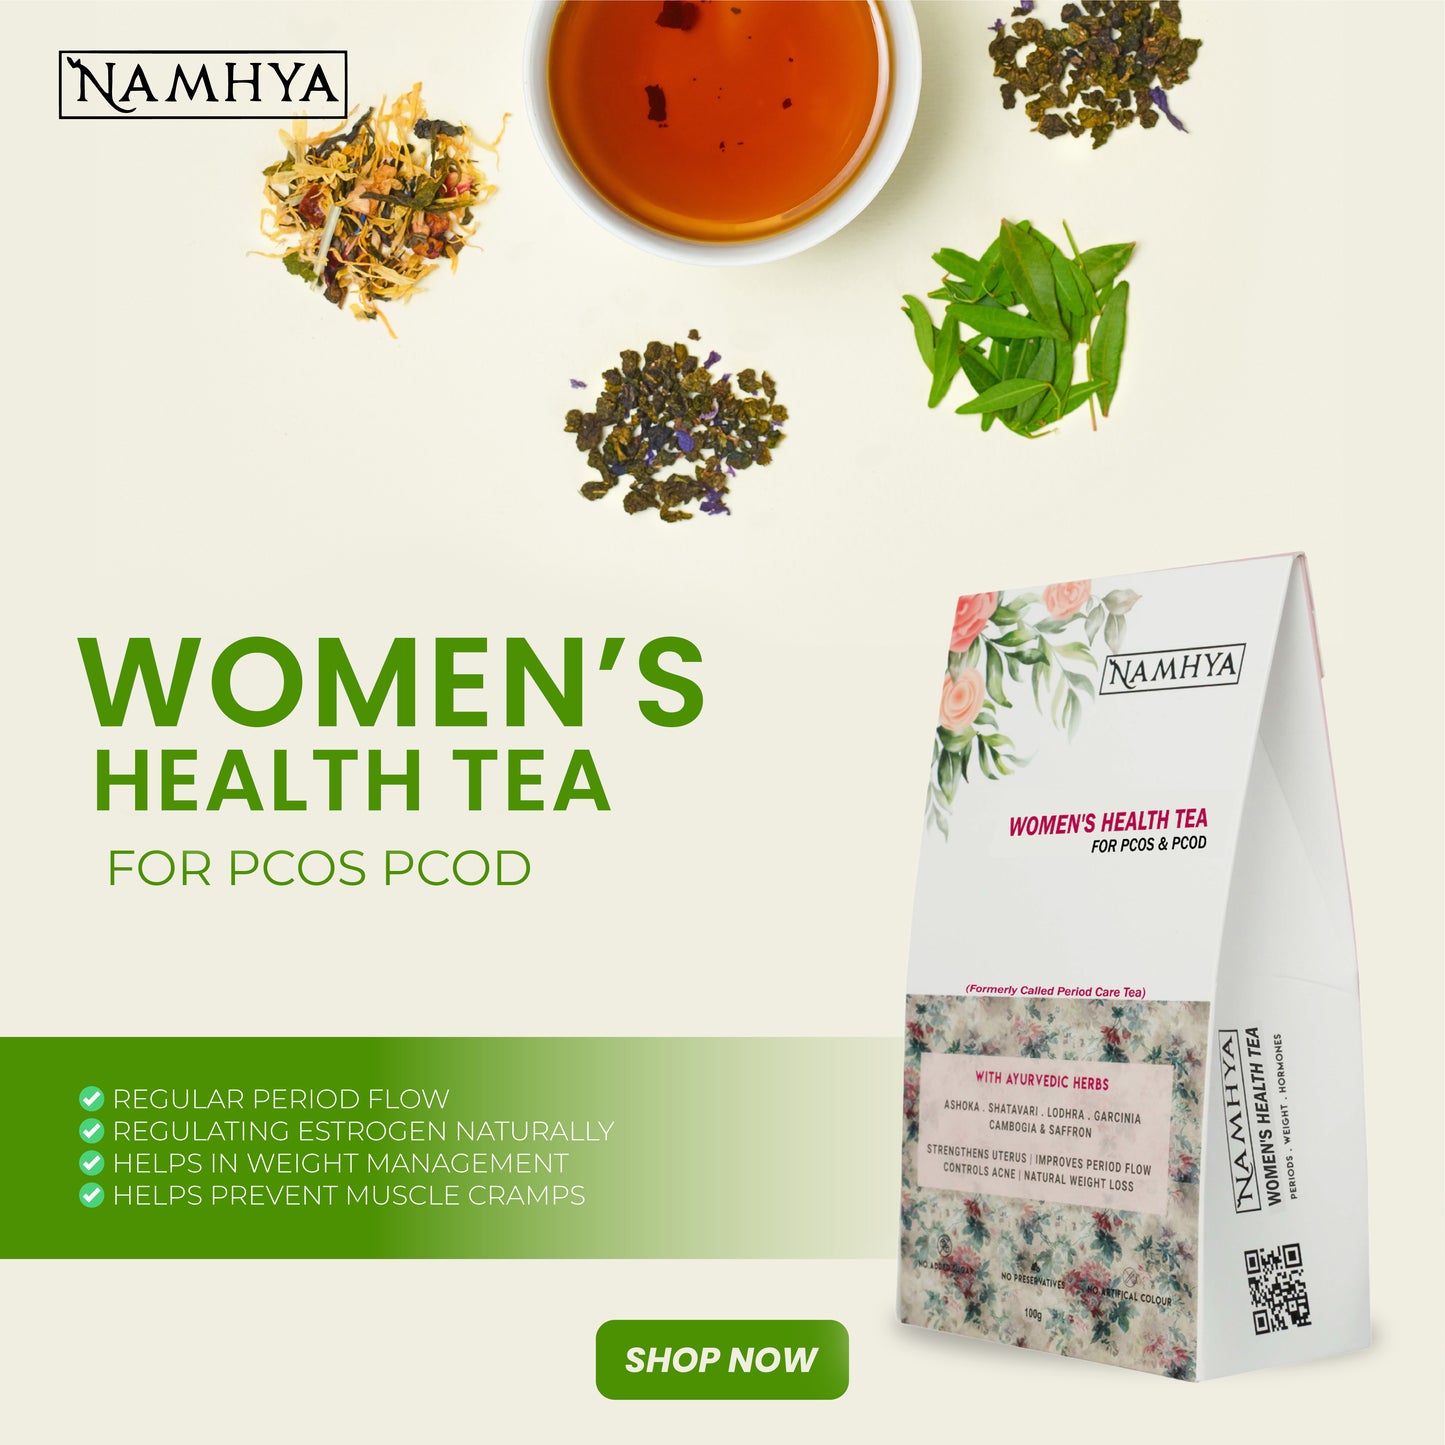 Namhya Foods Basket 1 | 4 Items Set | Rs. 2196